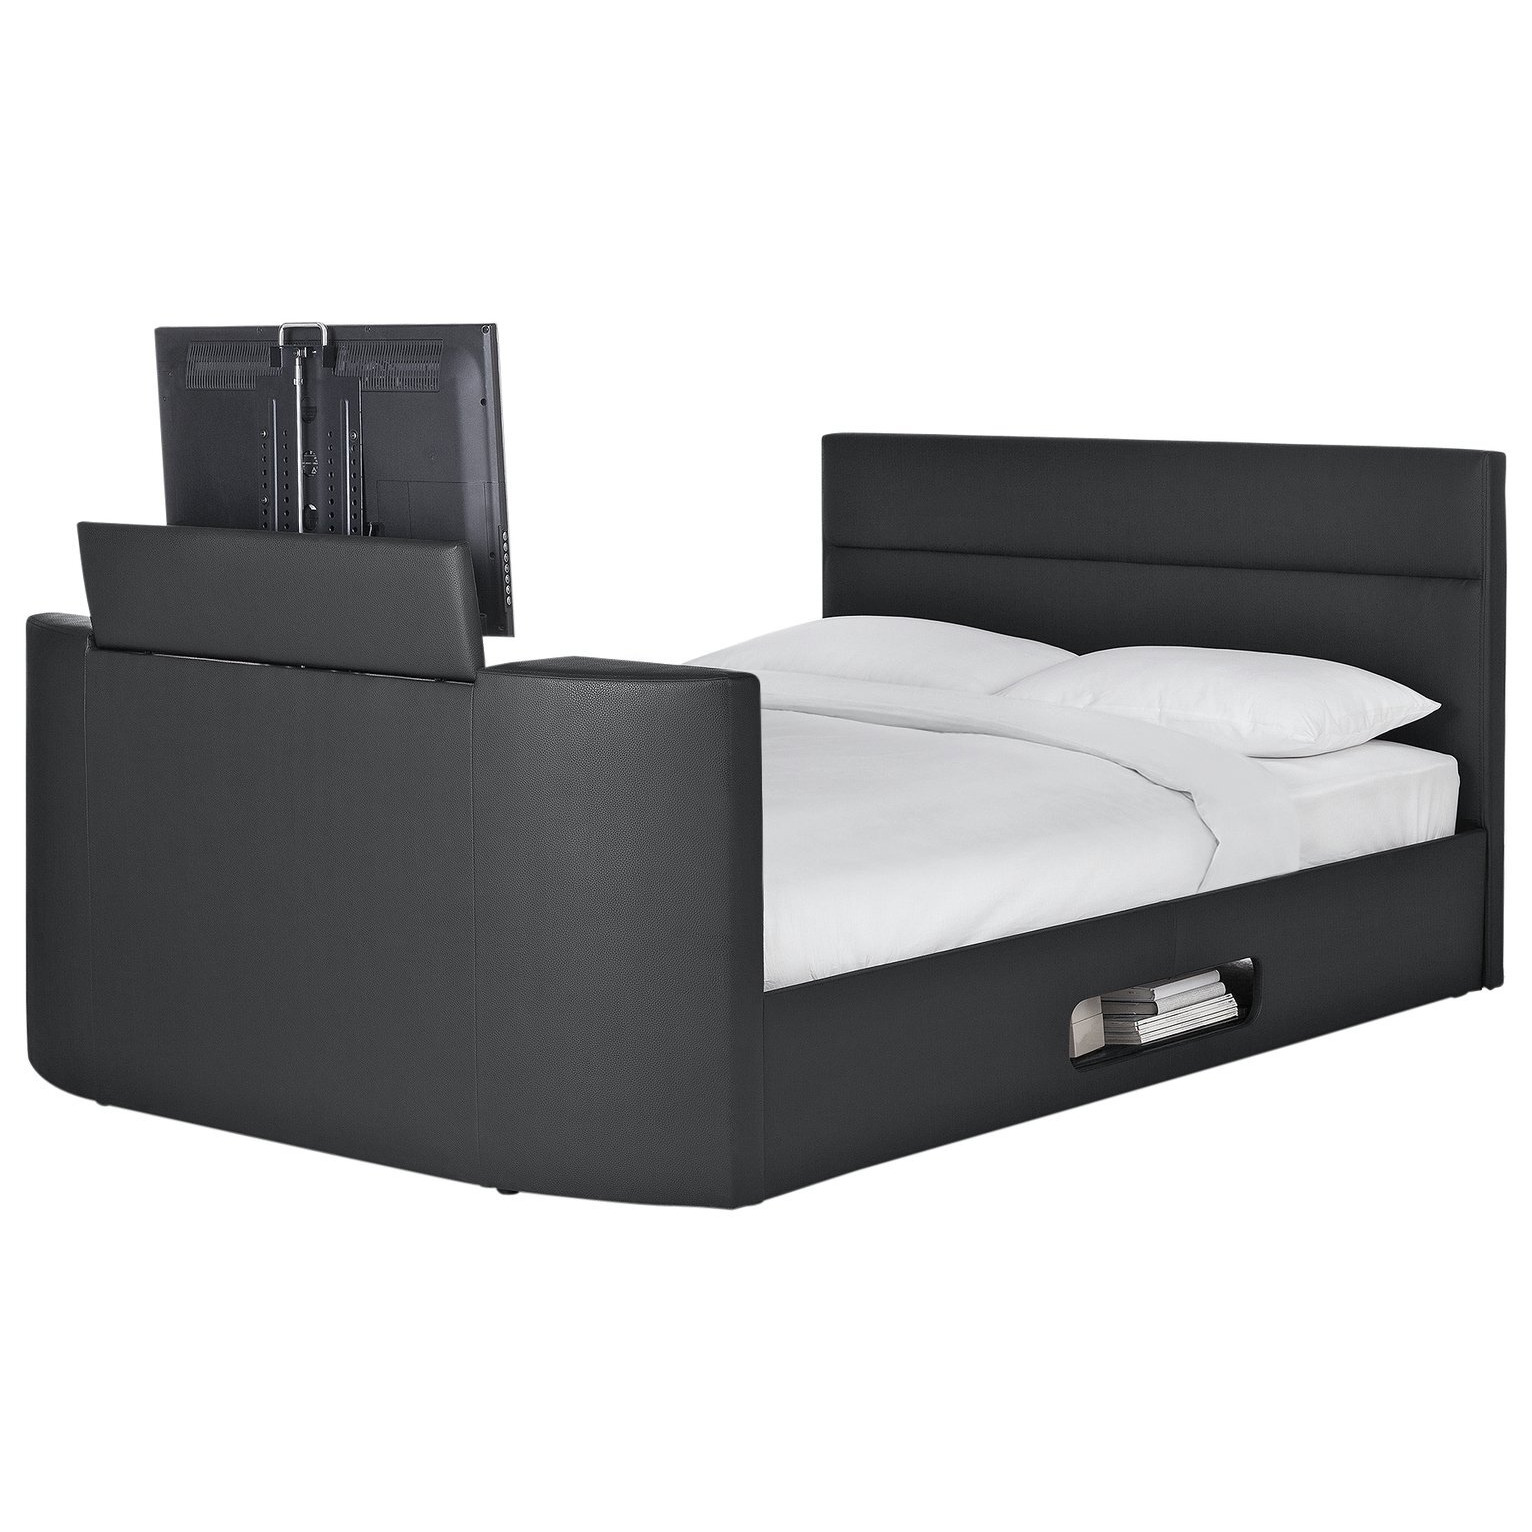 Argos Home Gemini Double TV Bed Frame - Black - image 1